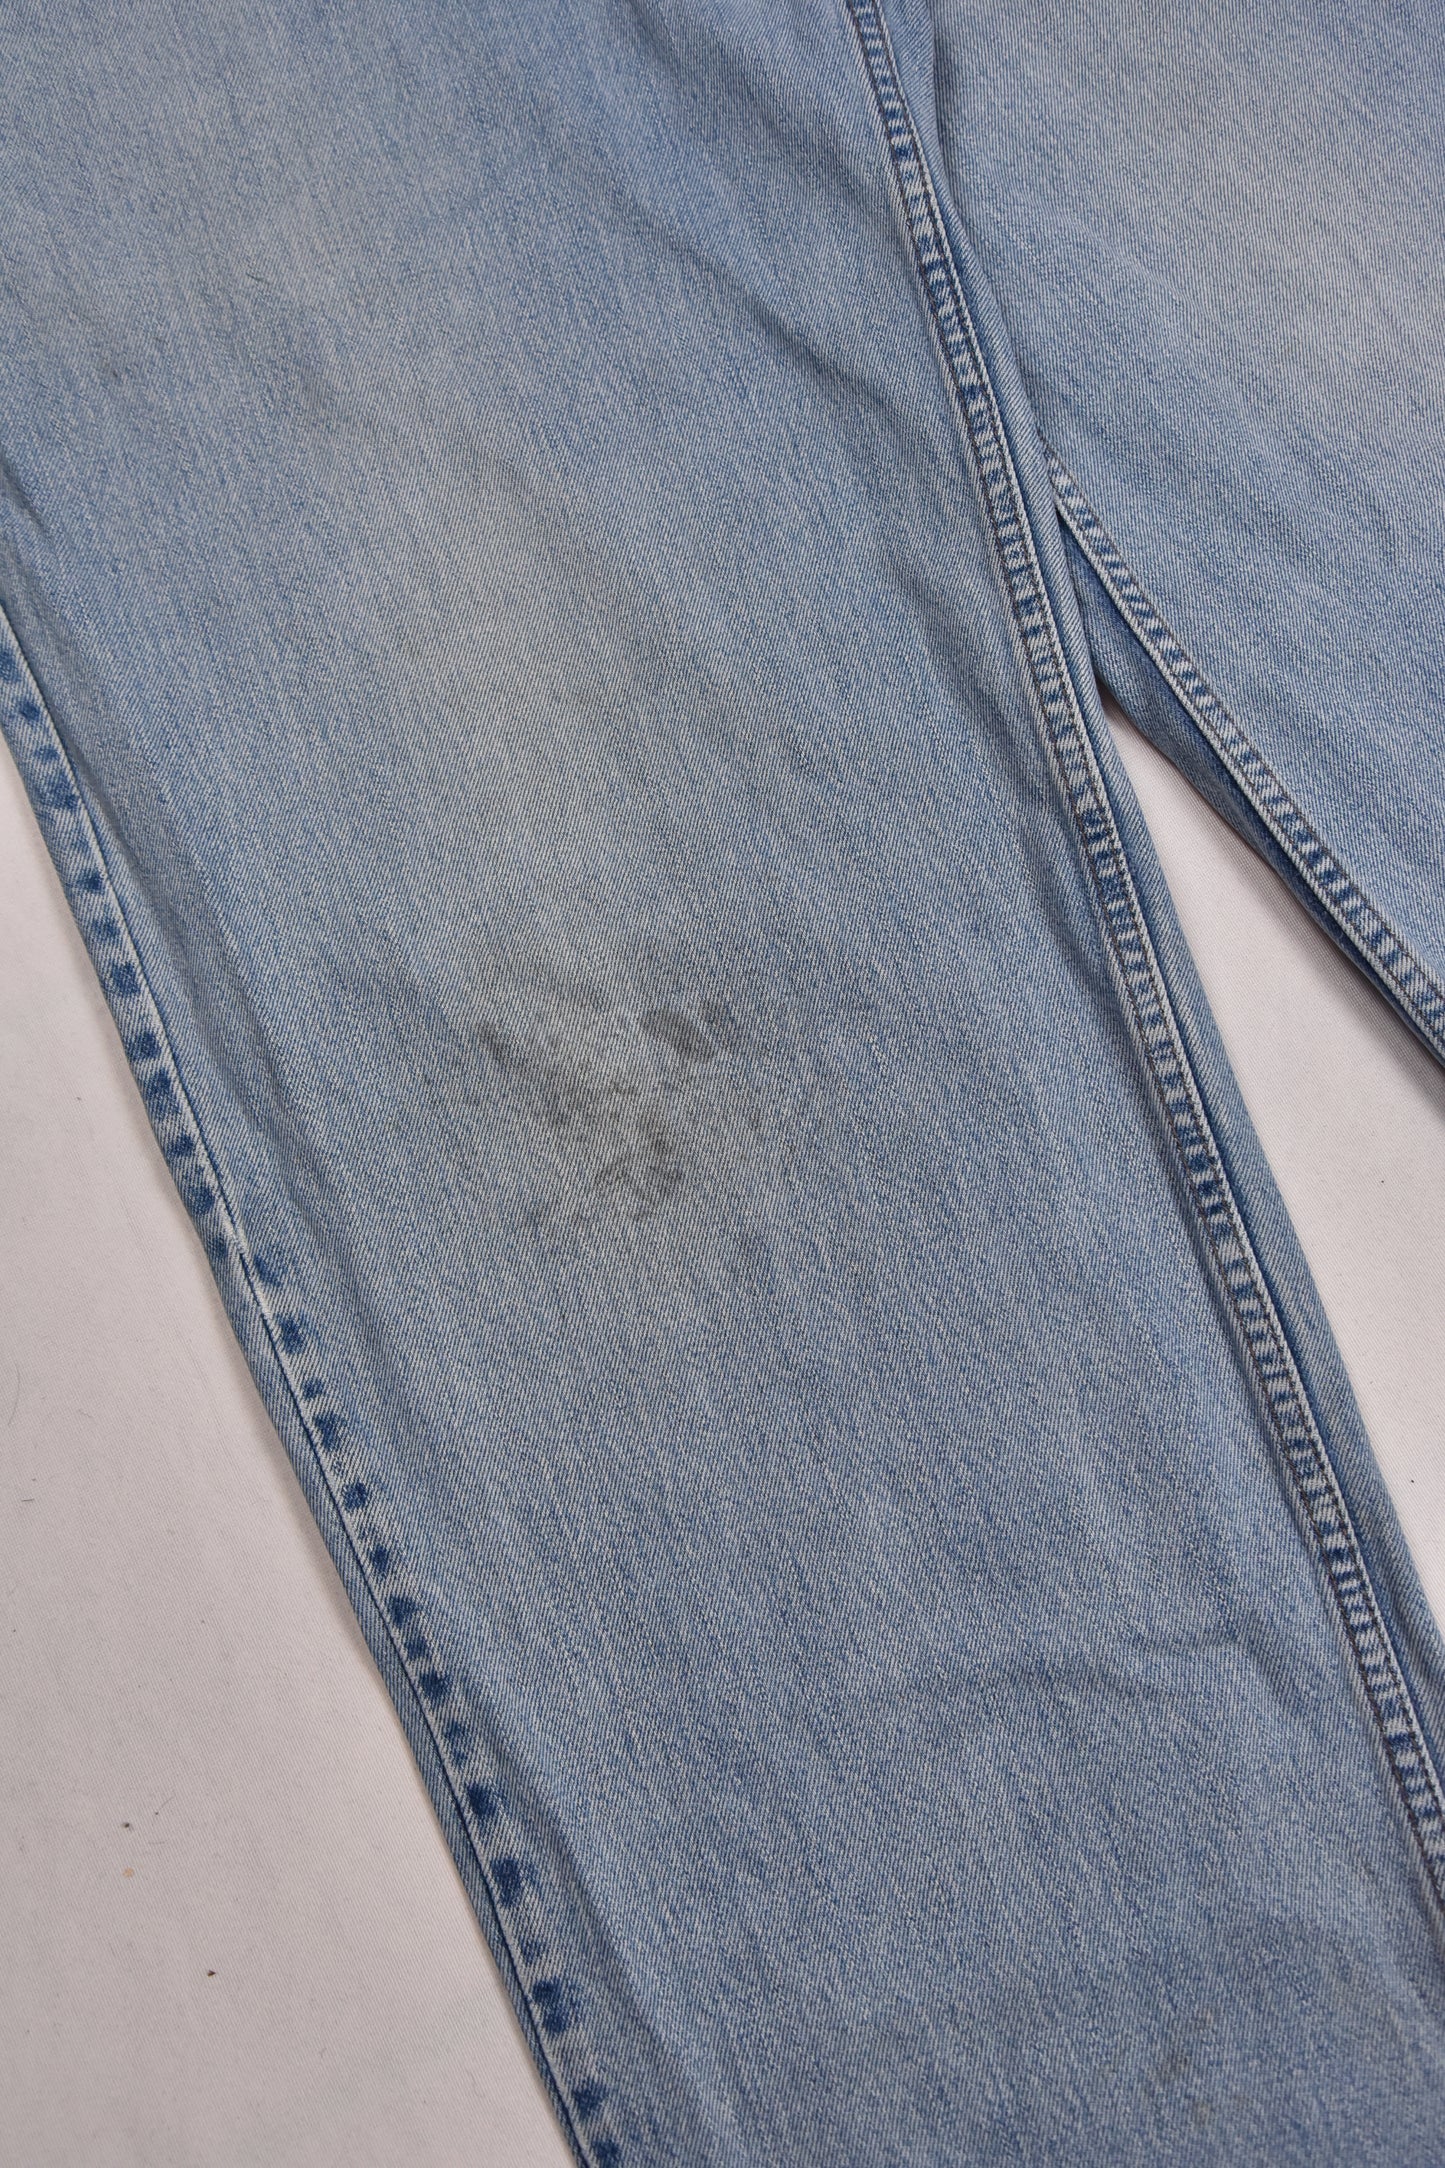 Jeans Levi's Silver Tab Vintage / 36x32